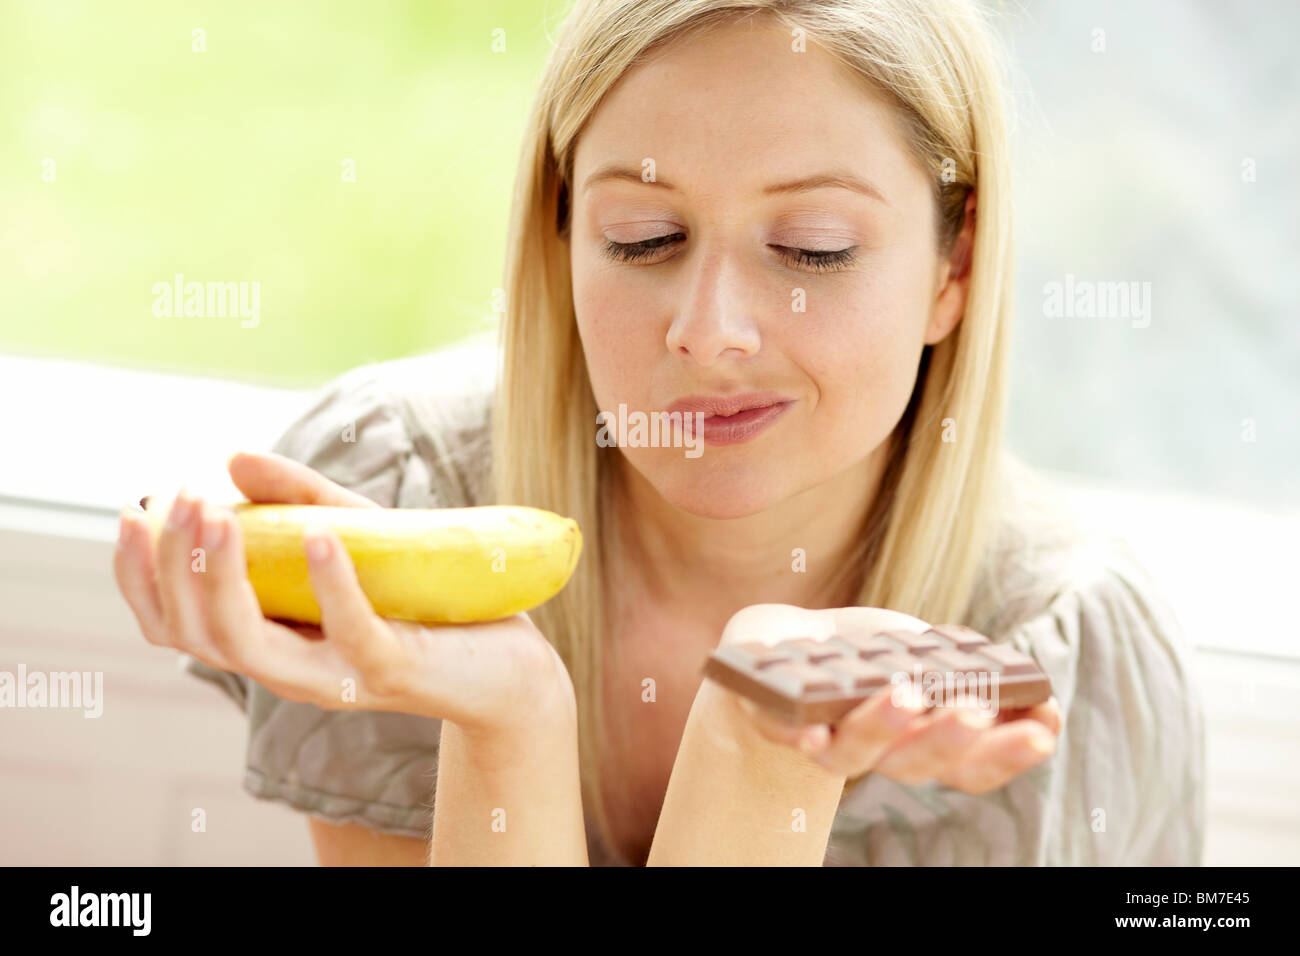 Woman deciding between fruit and chocolate Stock Photo